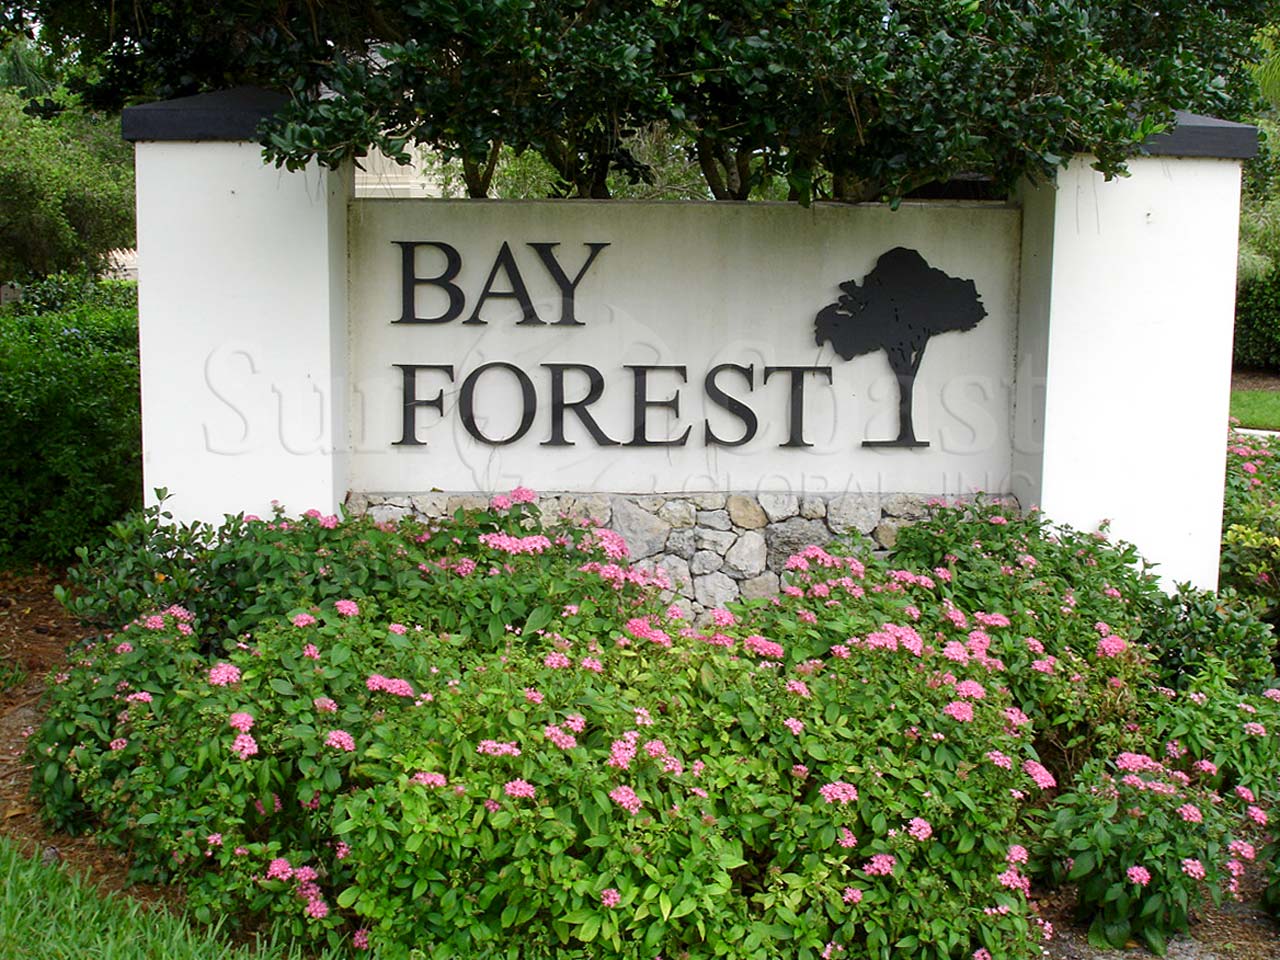 BAY FOREST Signage